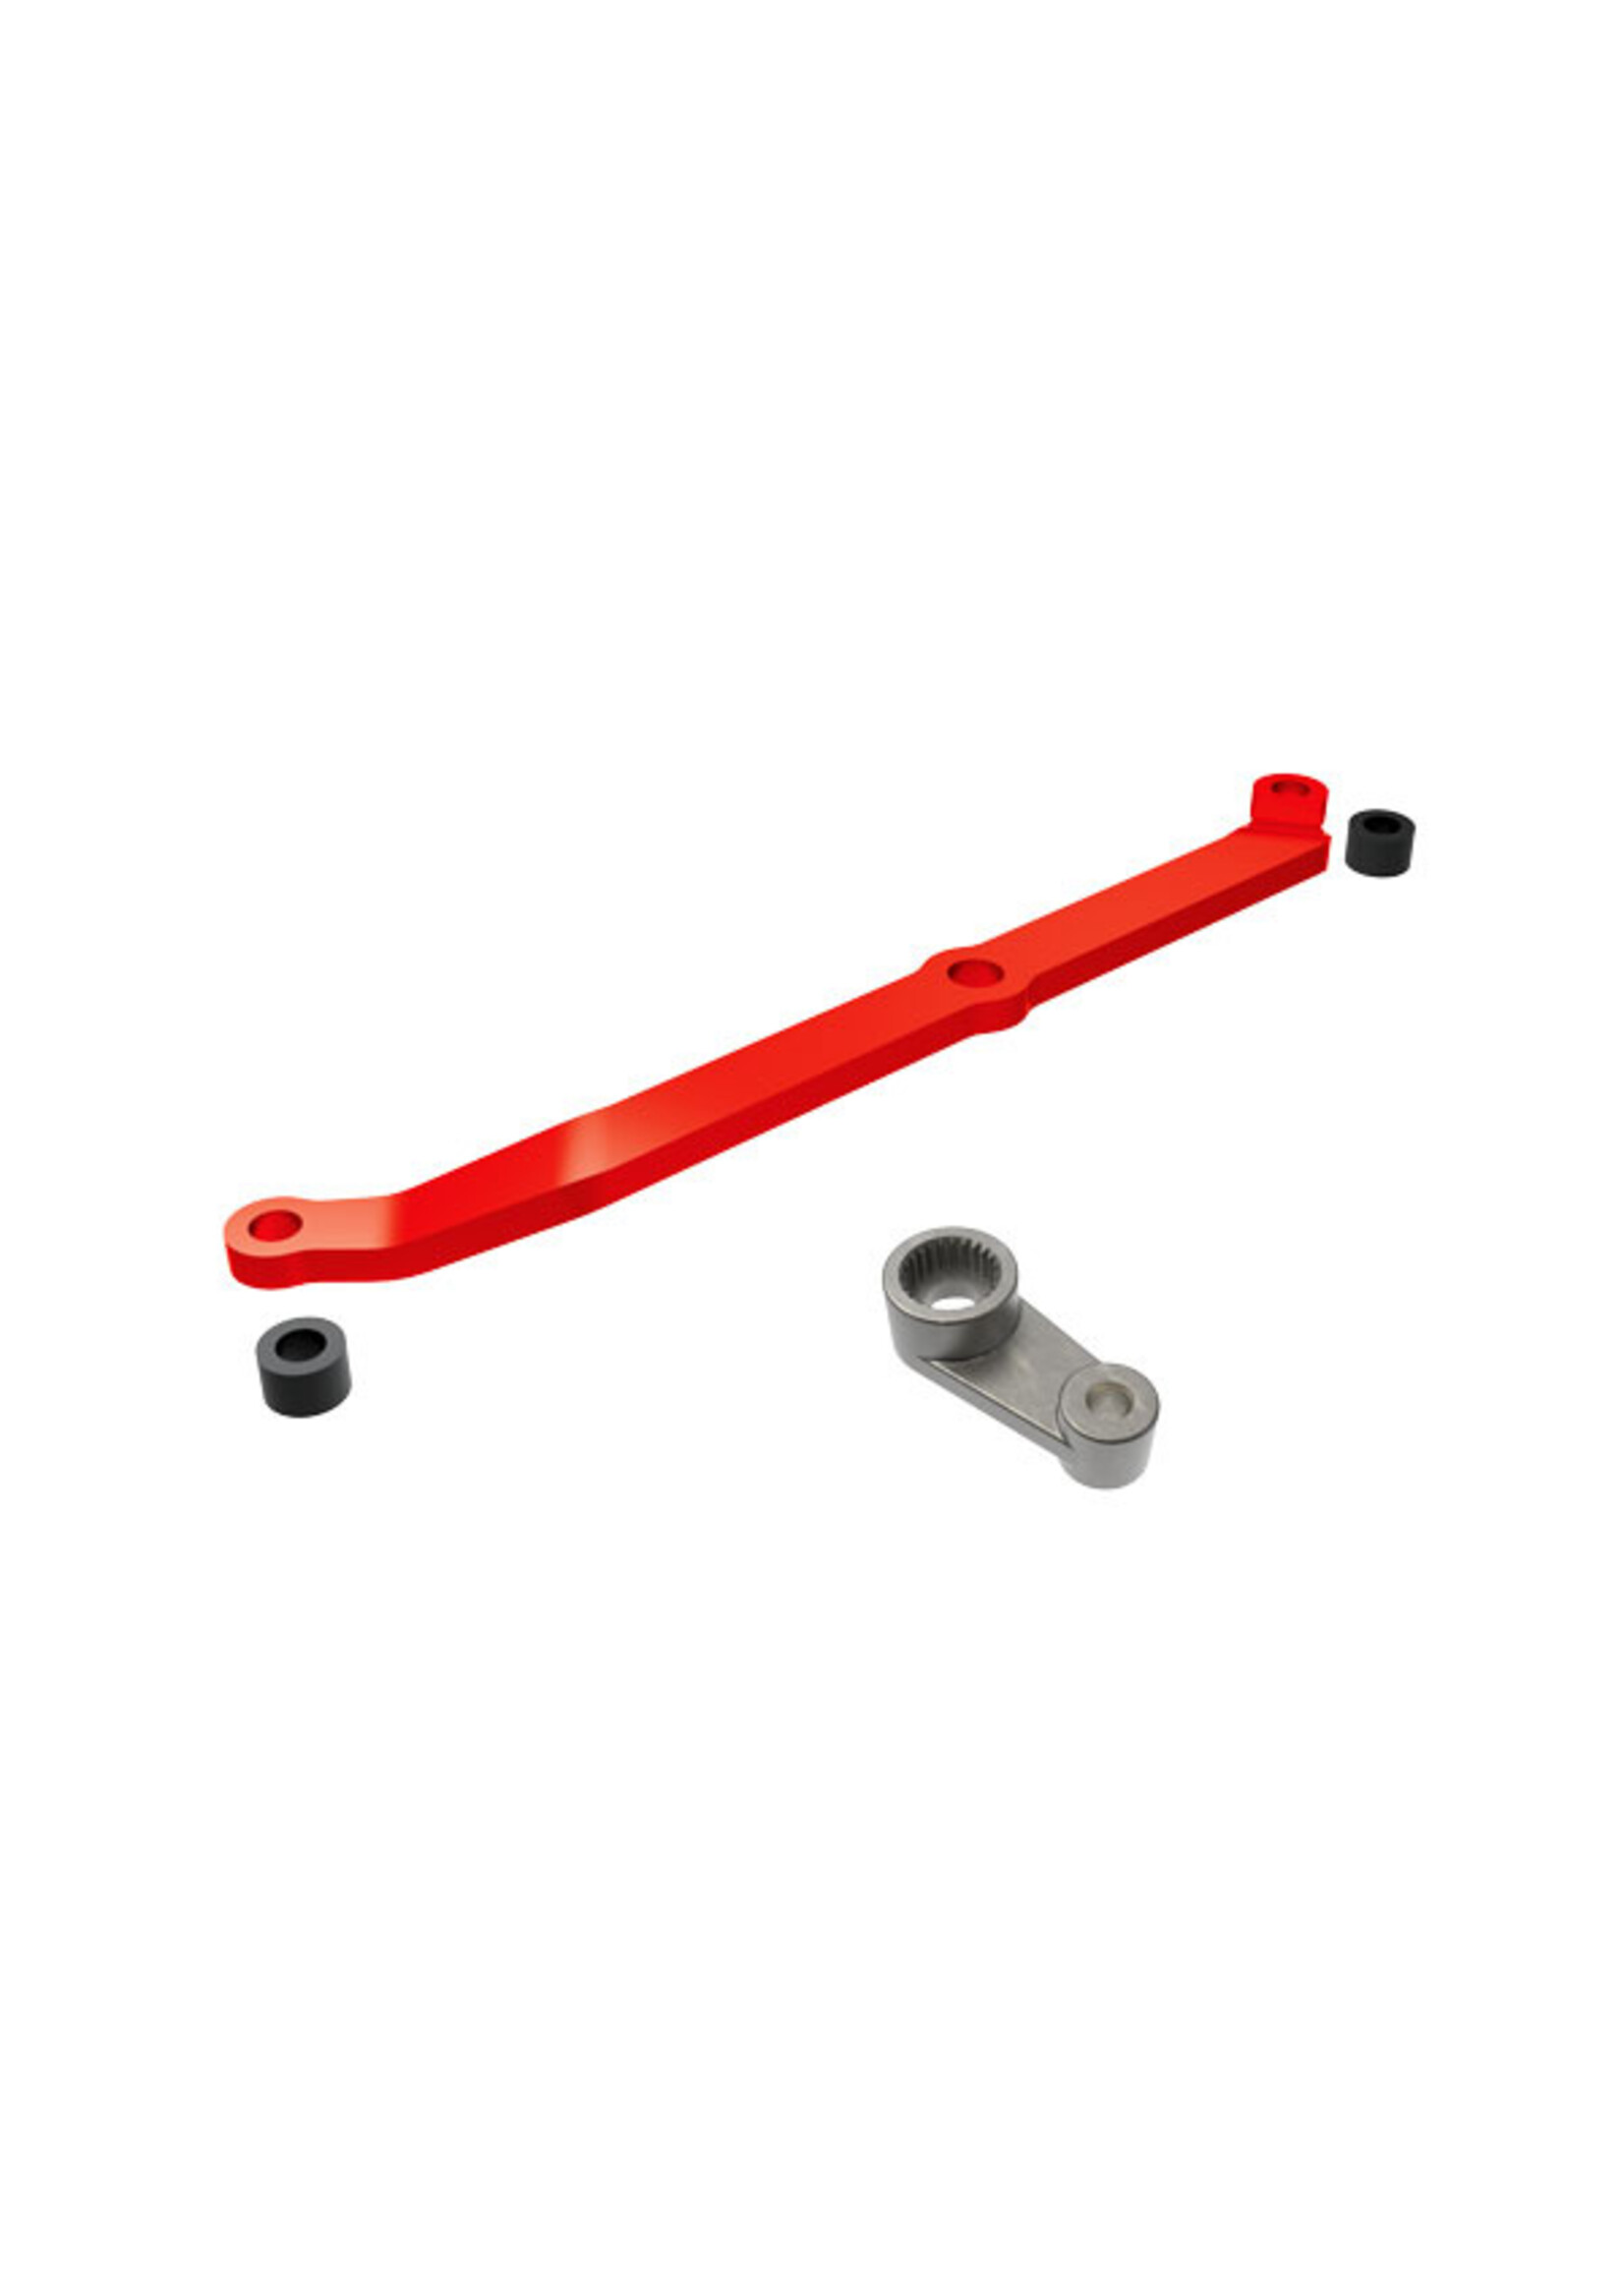 Traxxas 9748-RED - Aluminum Steering Link & Servo Horn - Red